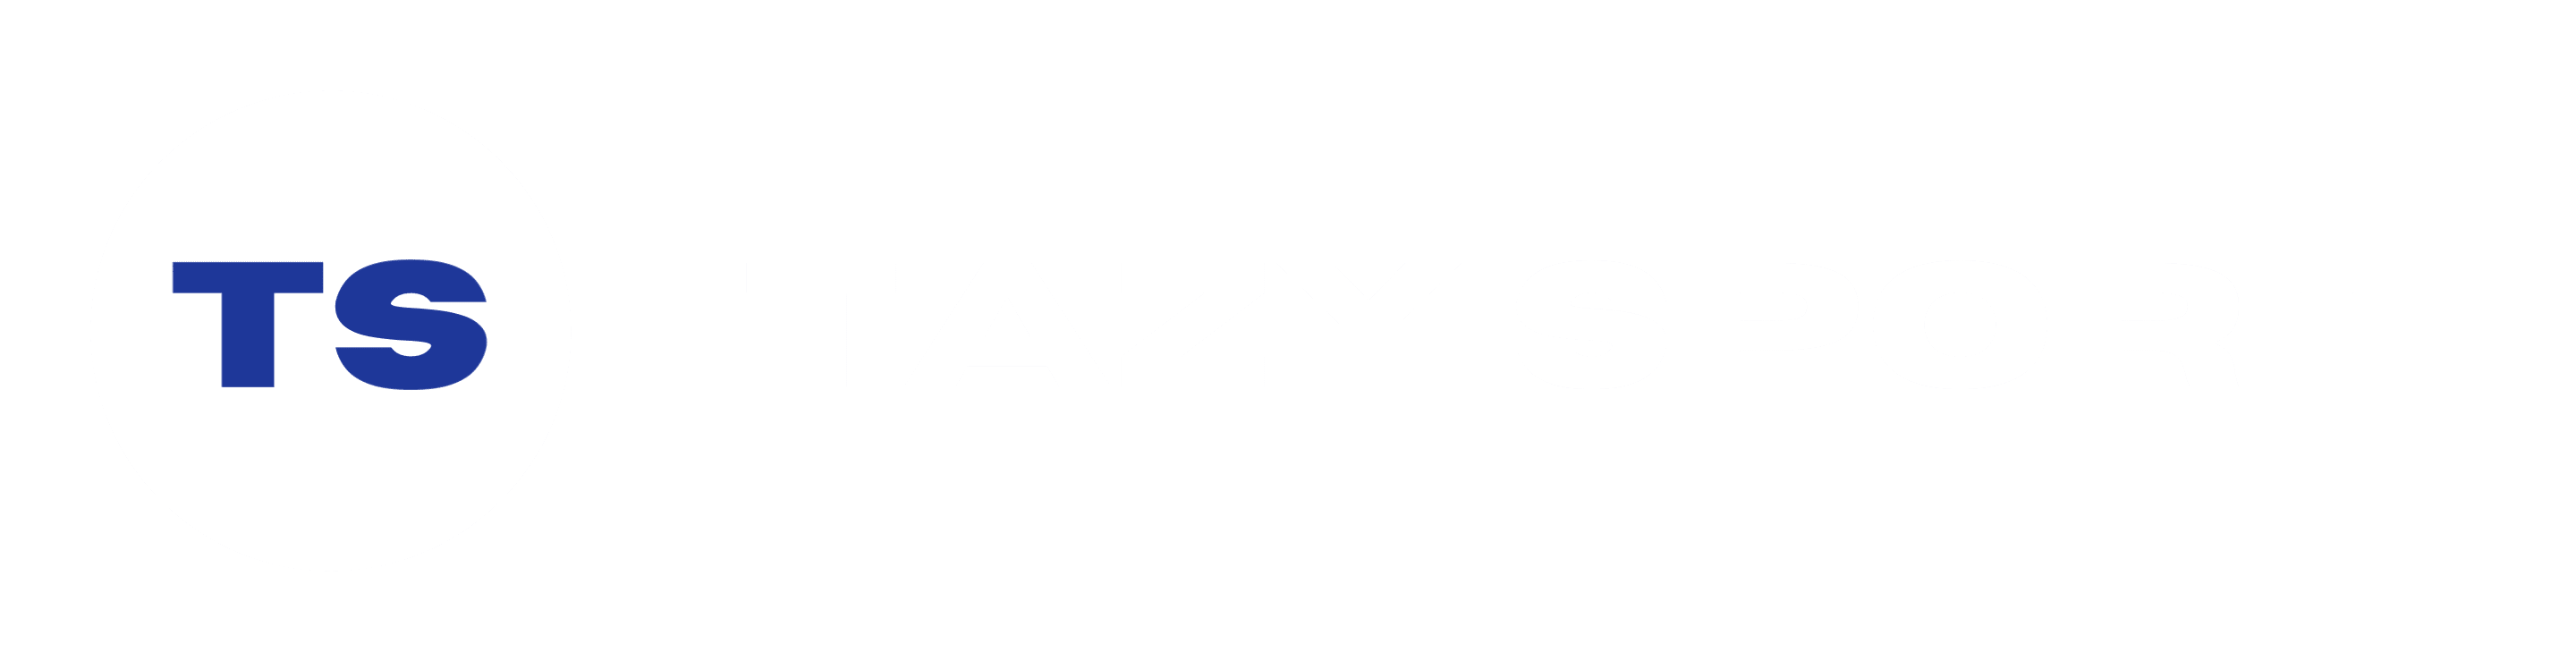 Tazy Sport logo